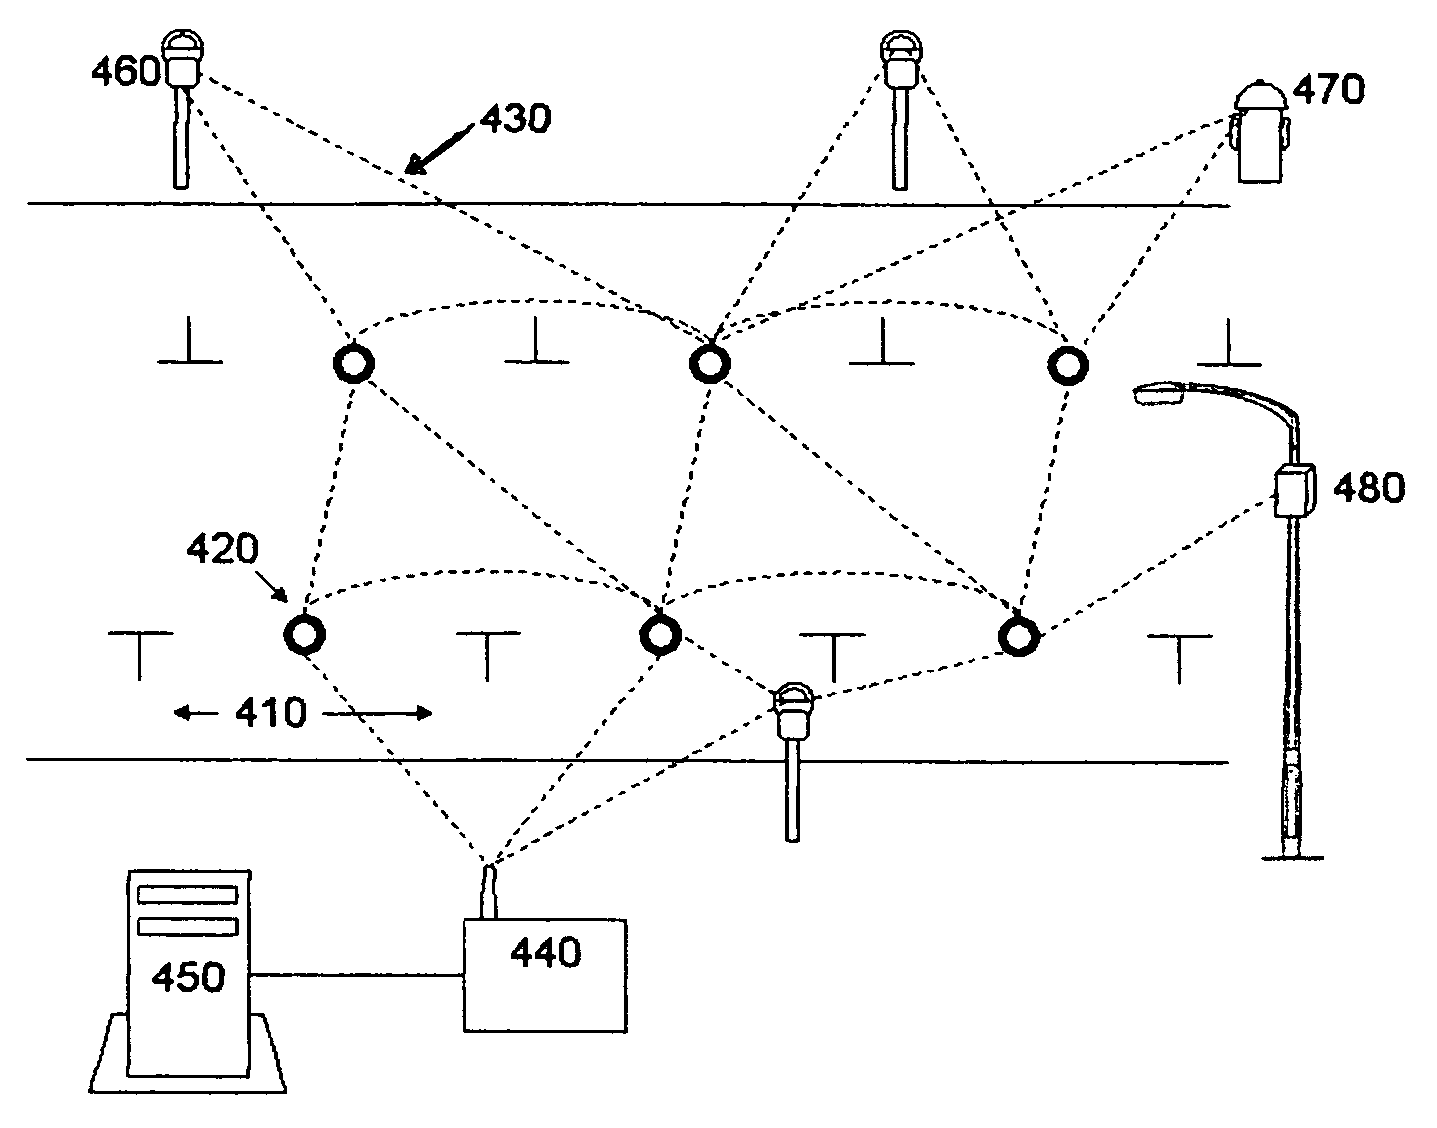 Wireless mesh network parking measurement system